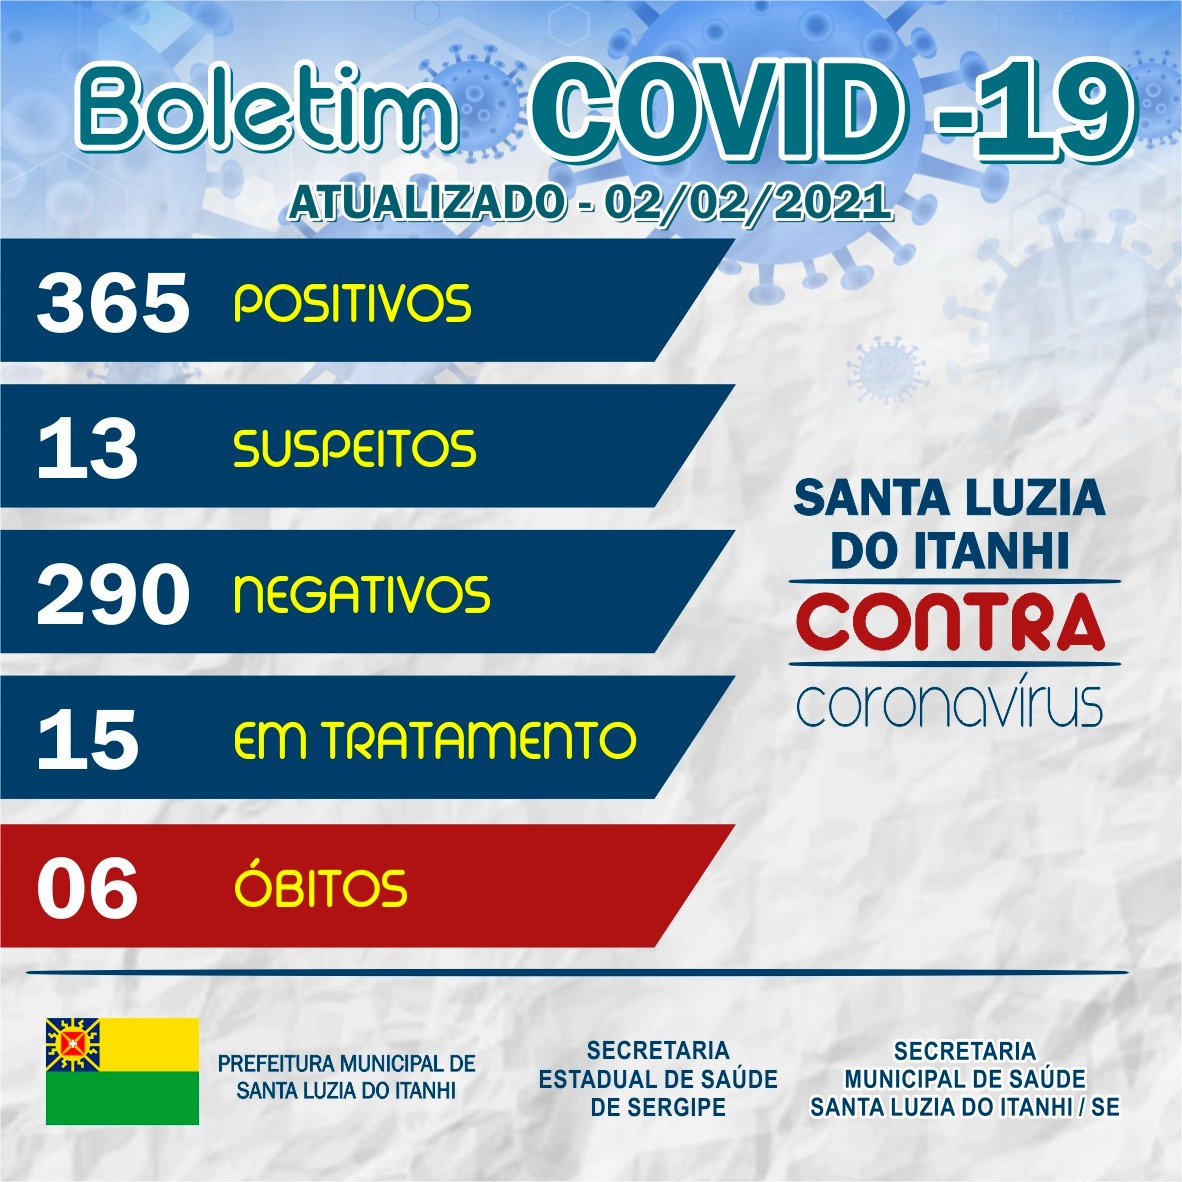 BOLETIM COVID-19